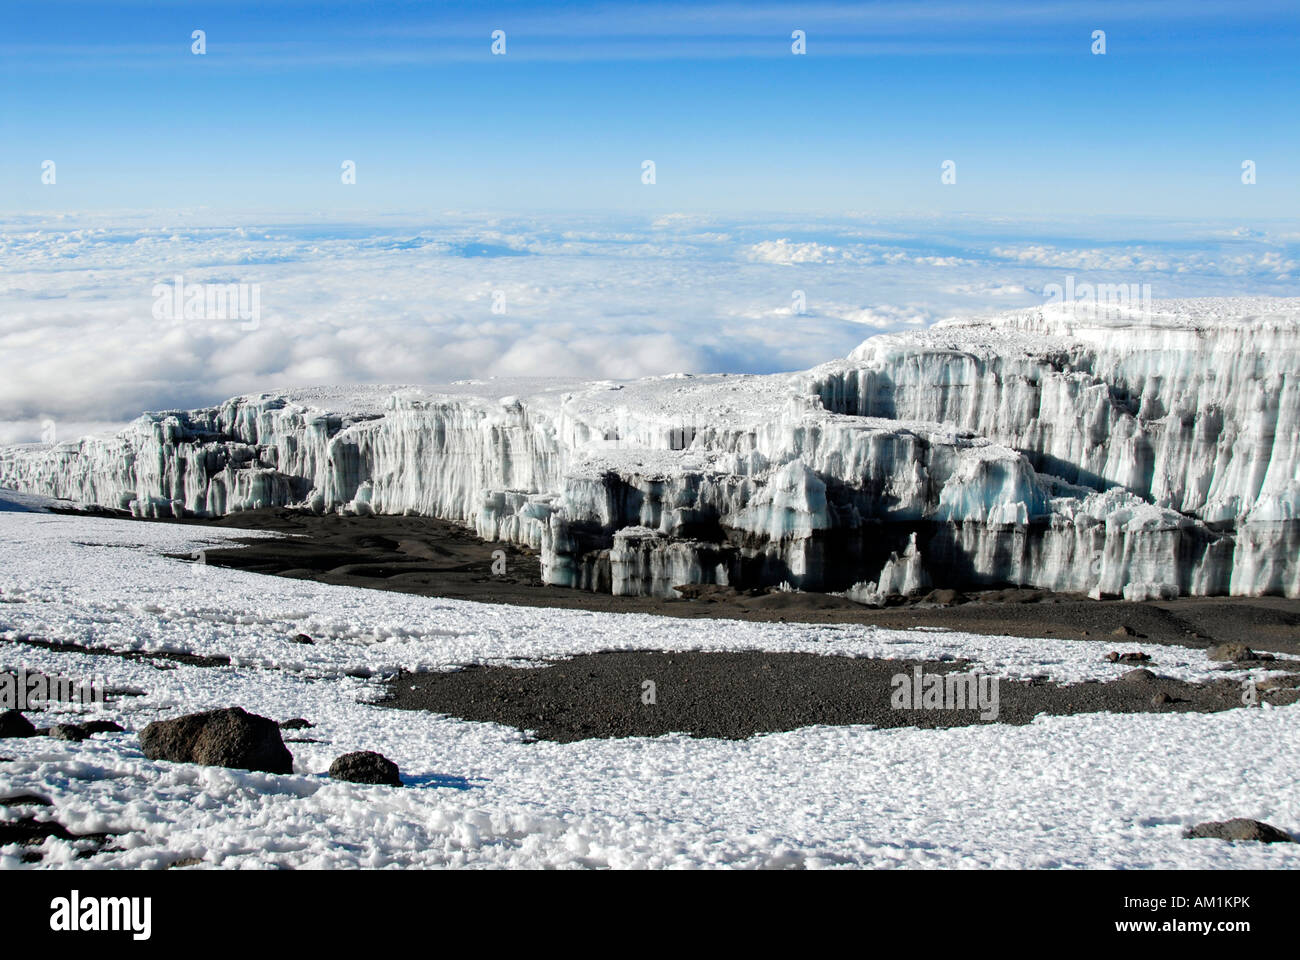 Masses of ice Kersten Gletscher crater rim Kilimanjaro Tanzania Stock Photo